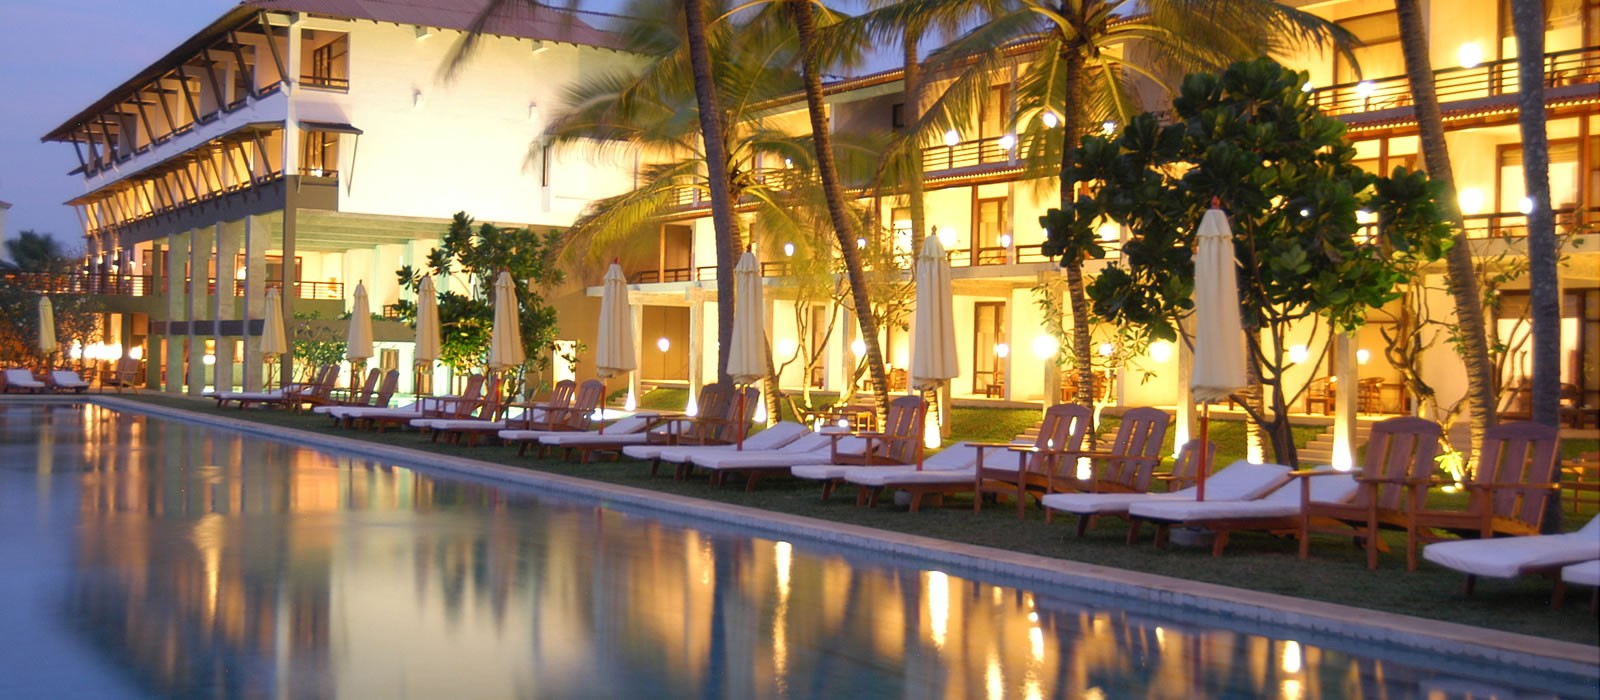 Sri Lanka Honeymoons - Jetwing Beach Resort - PD Header